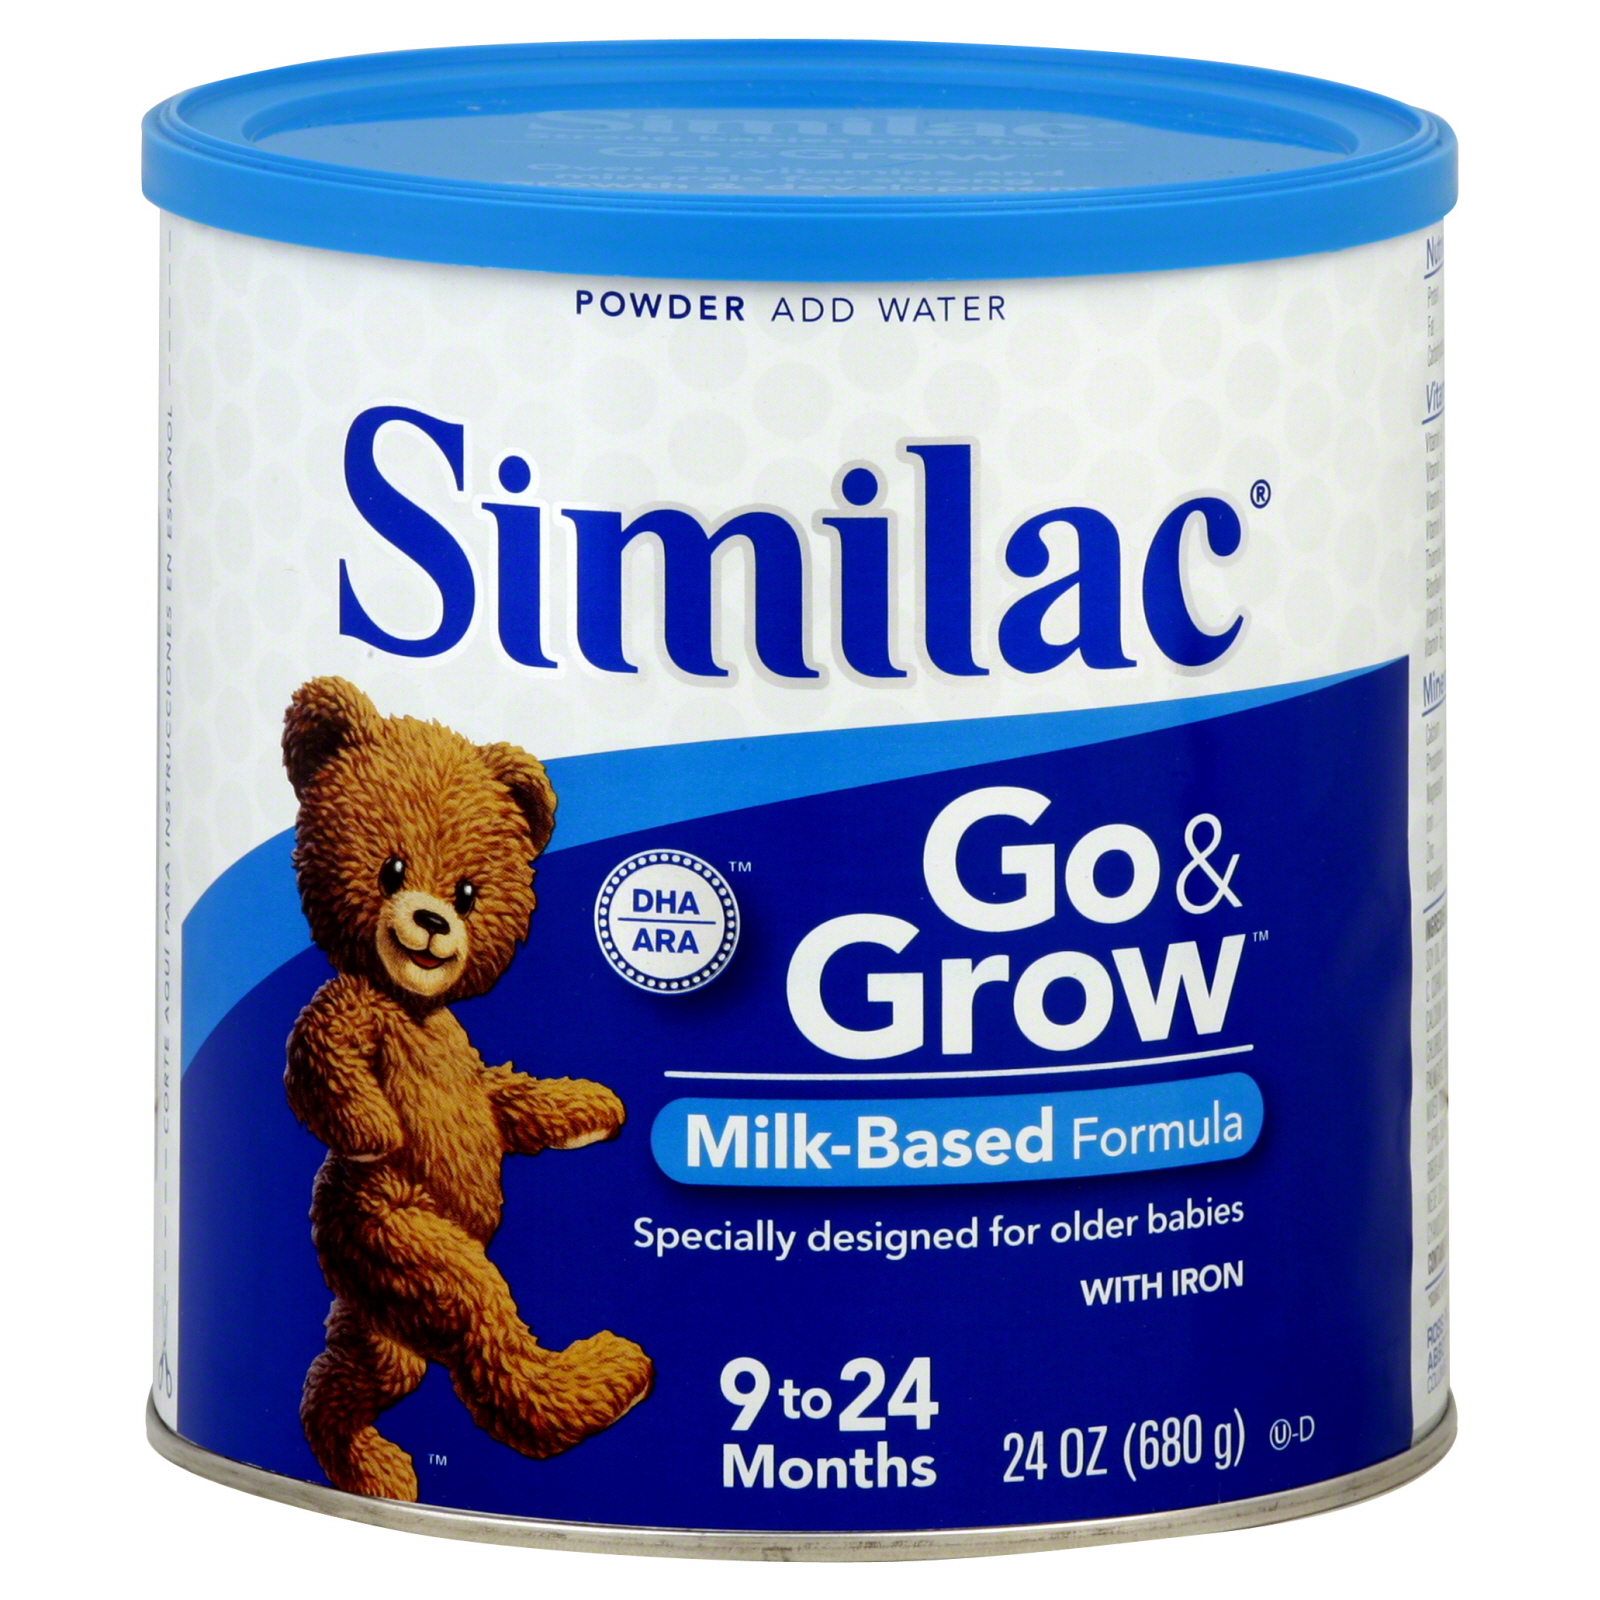 Similac Go & Grow Formula, Milk-Based with Iron, Powder, 24 oz (680 g)